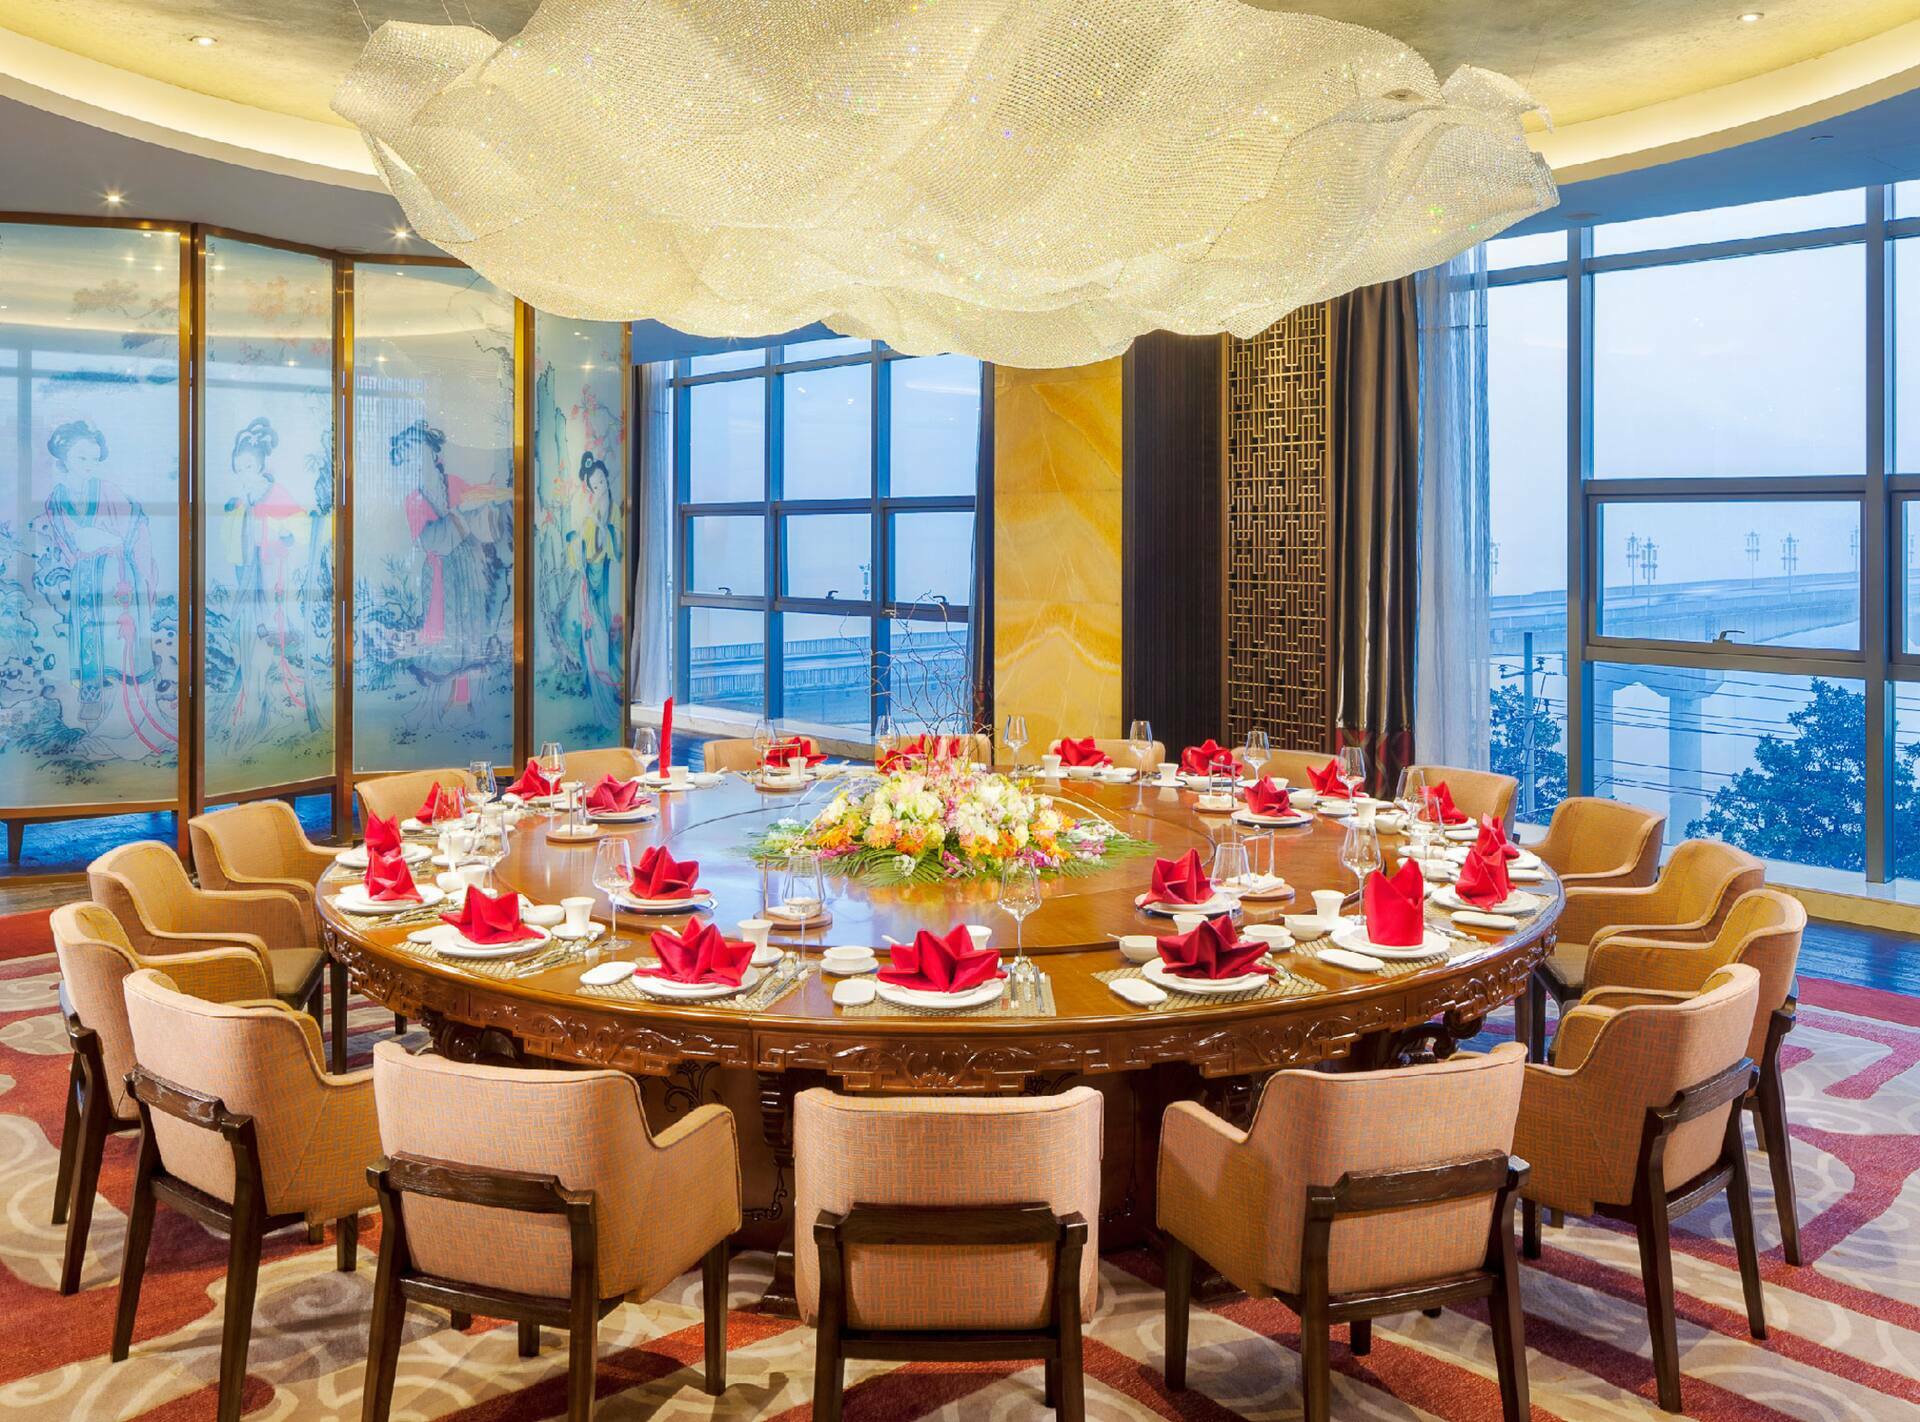 Photo of Hilton Zhuzhou, Zhuzhou, China